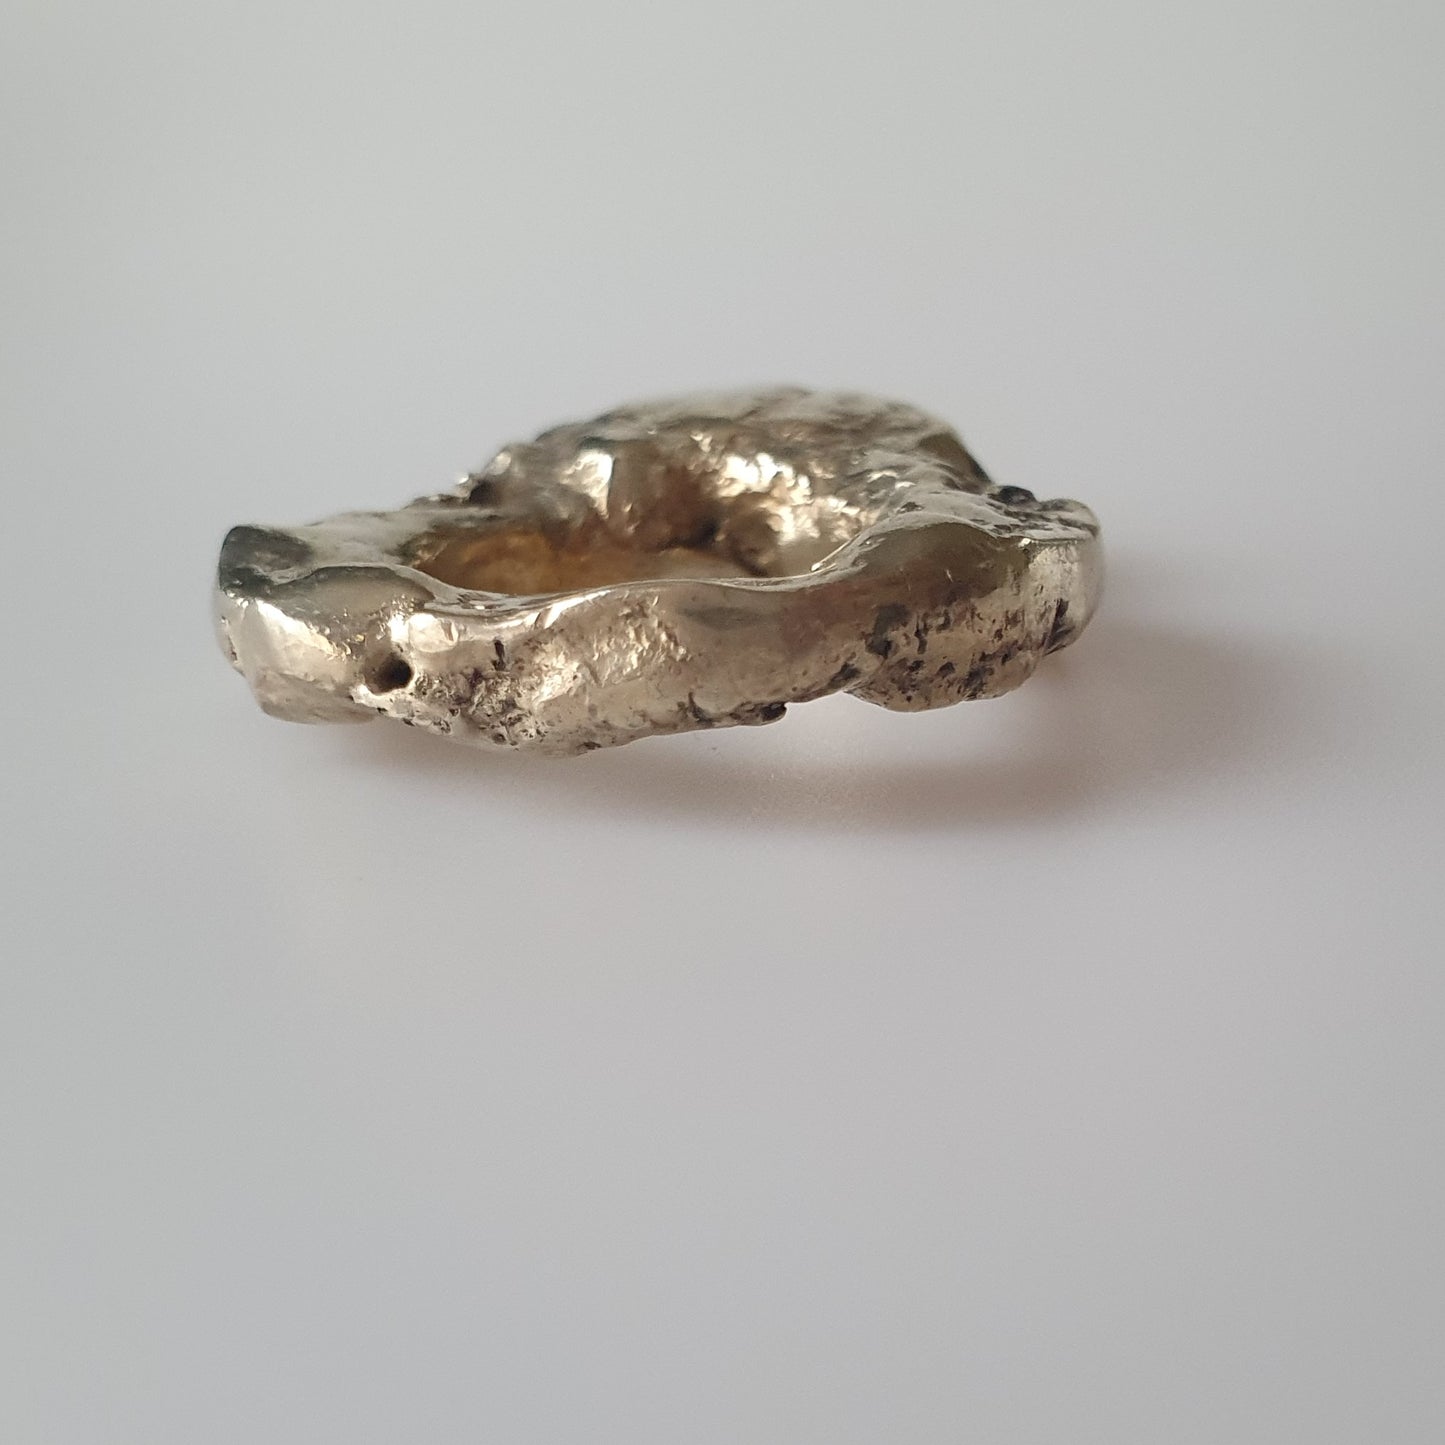 18ct gold plated ring on silver,Vintage ring, handmade, statement ring, sterling silver, unique, unusual, rare, designer, brutalist, minimalist, punk, amethyst gemstone